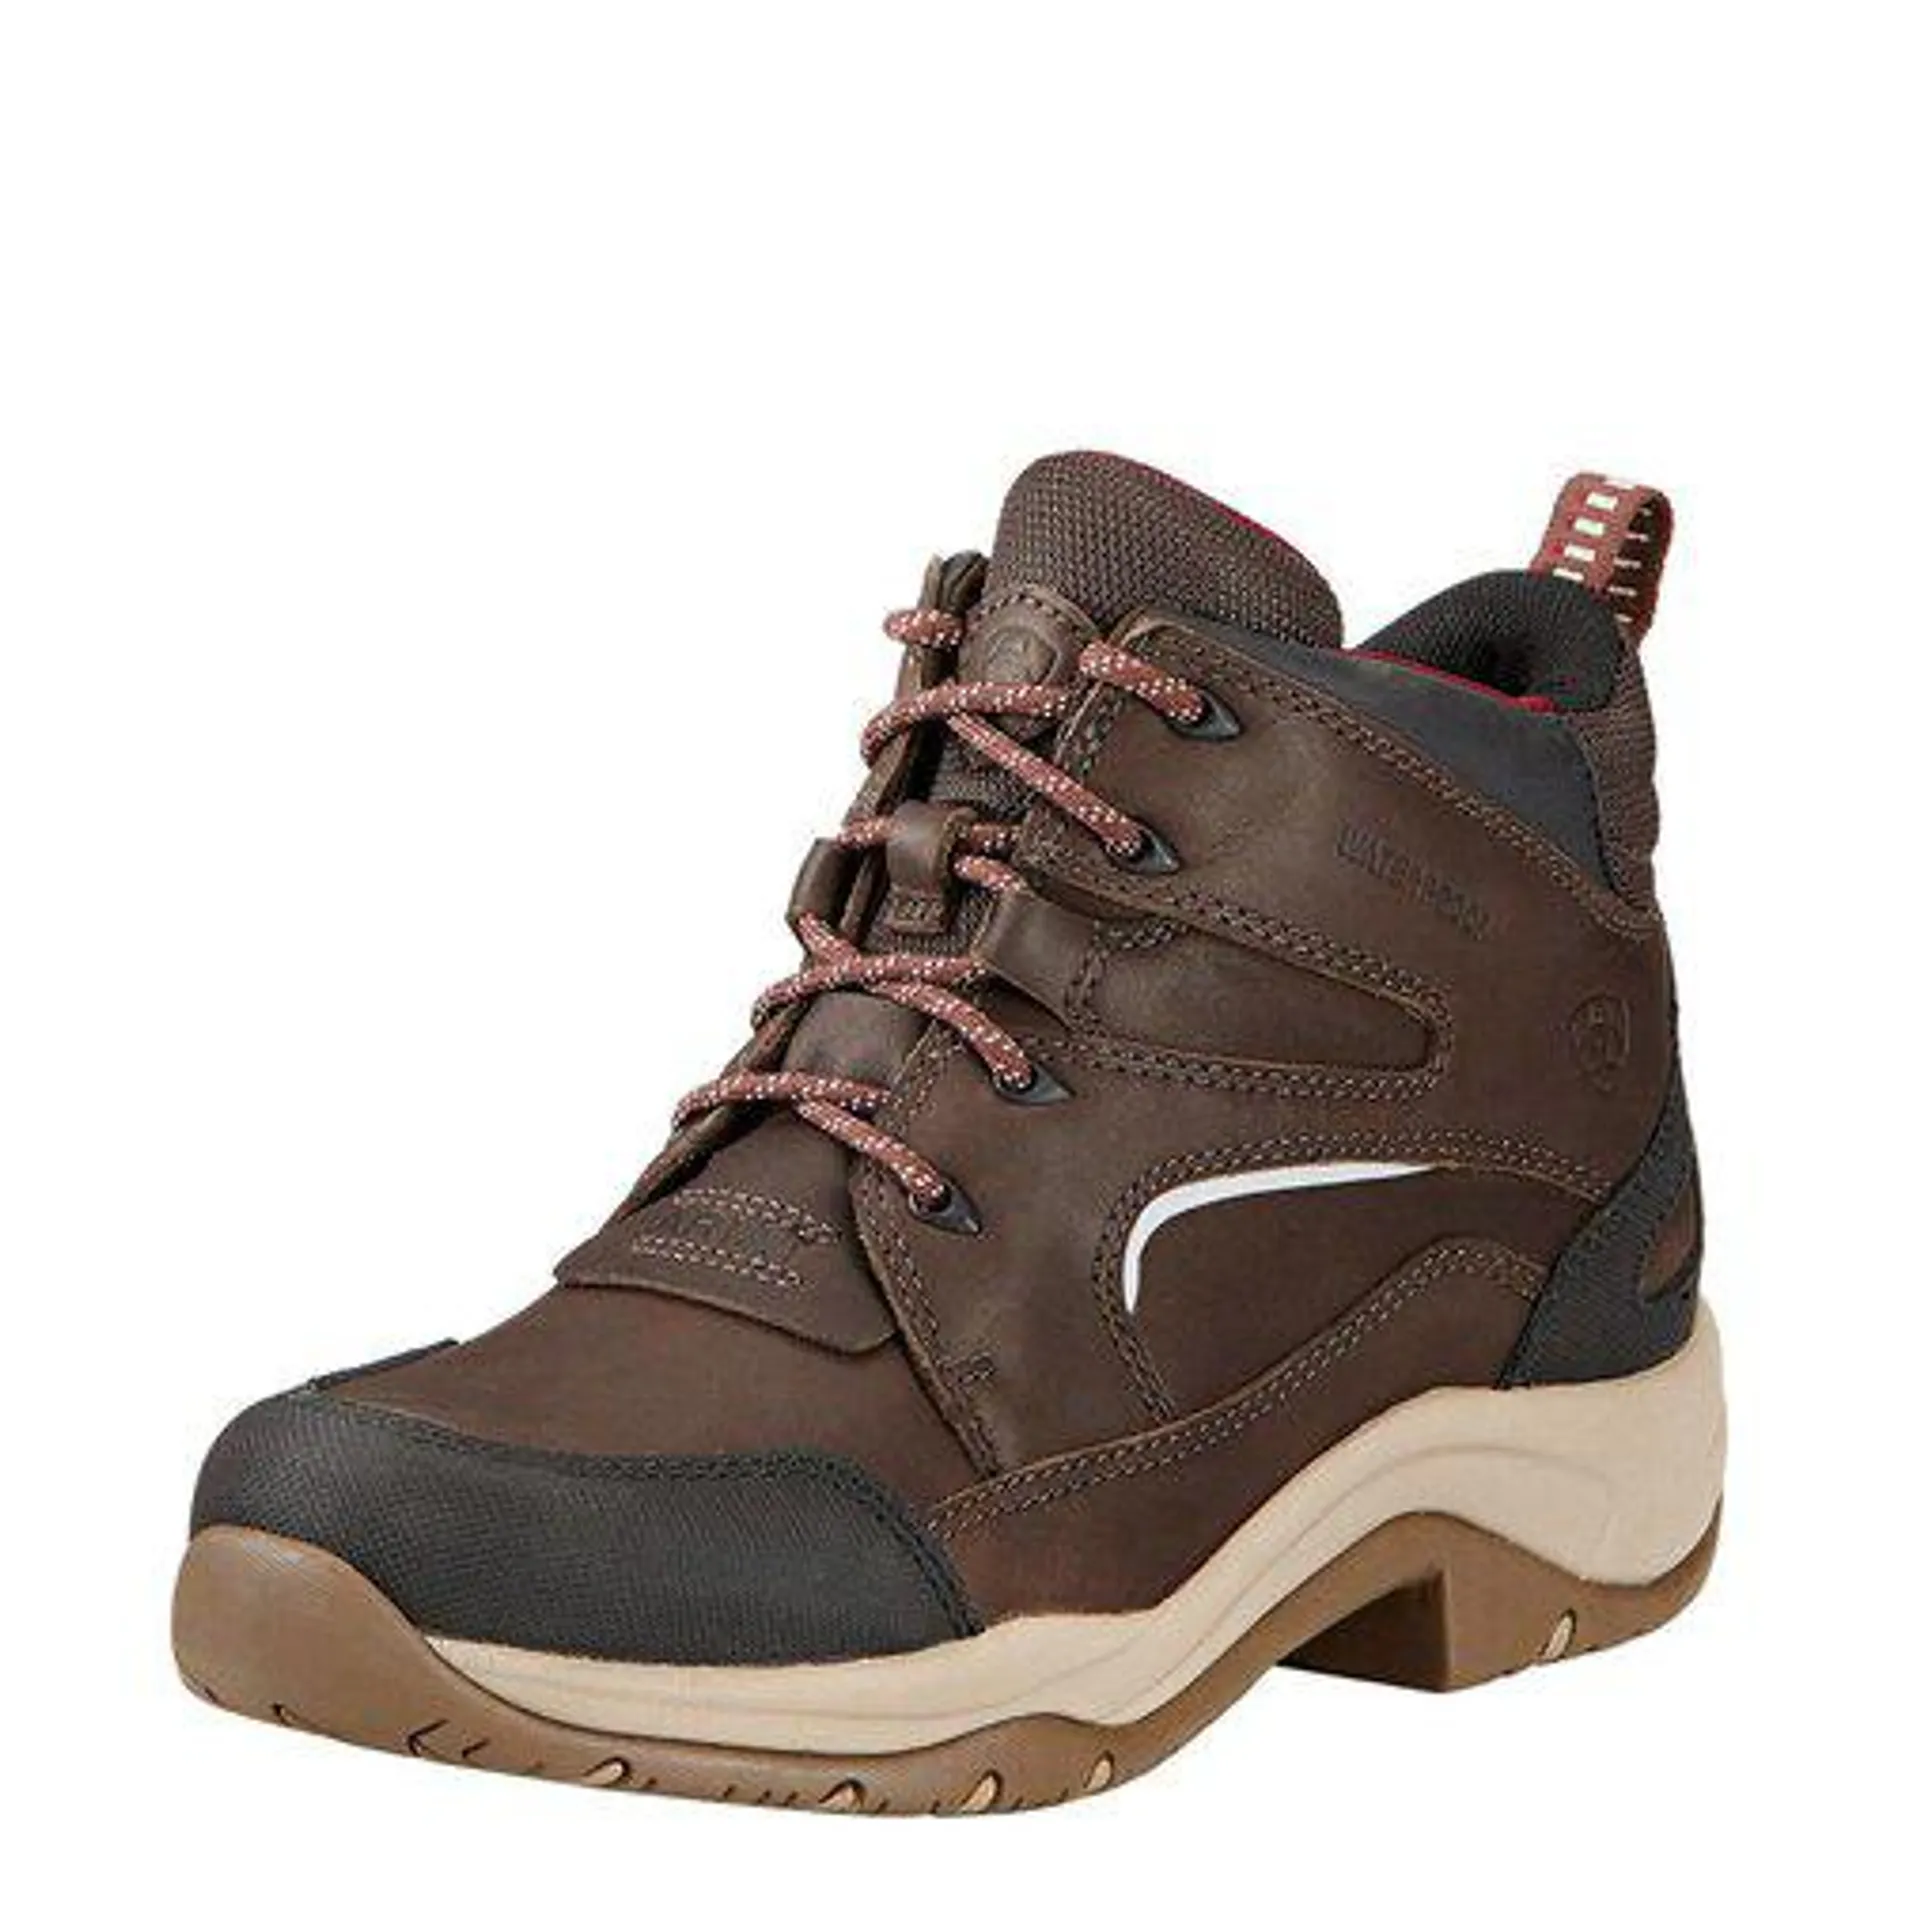 Ariat Telluride II H20 Ladies Boots - Dark Brown